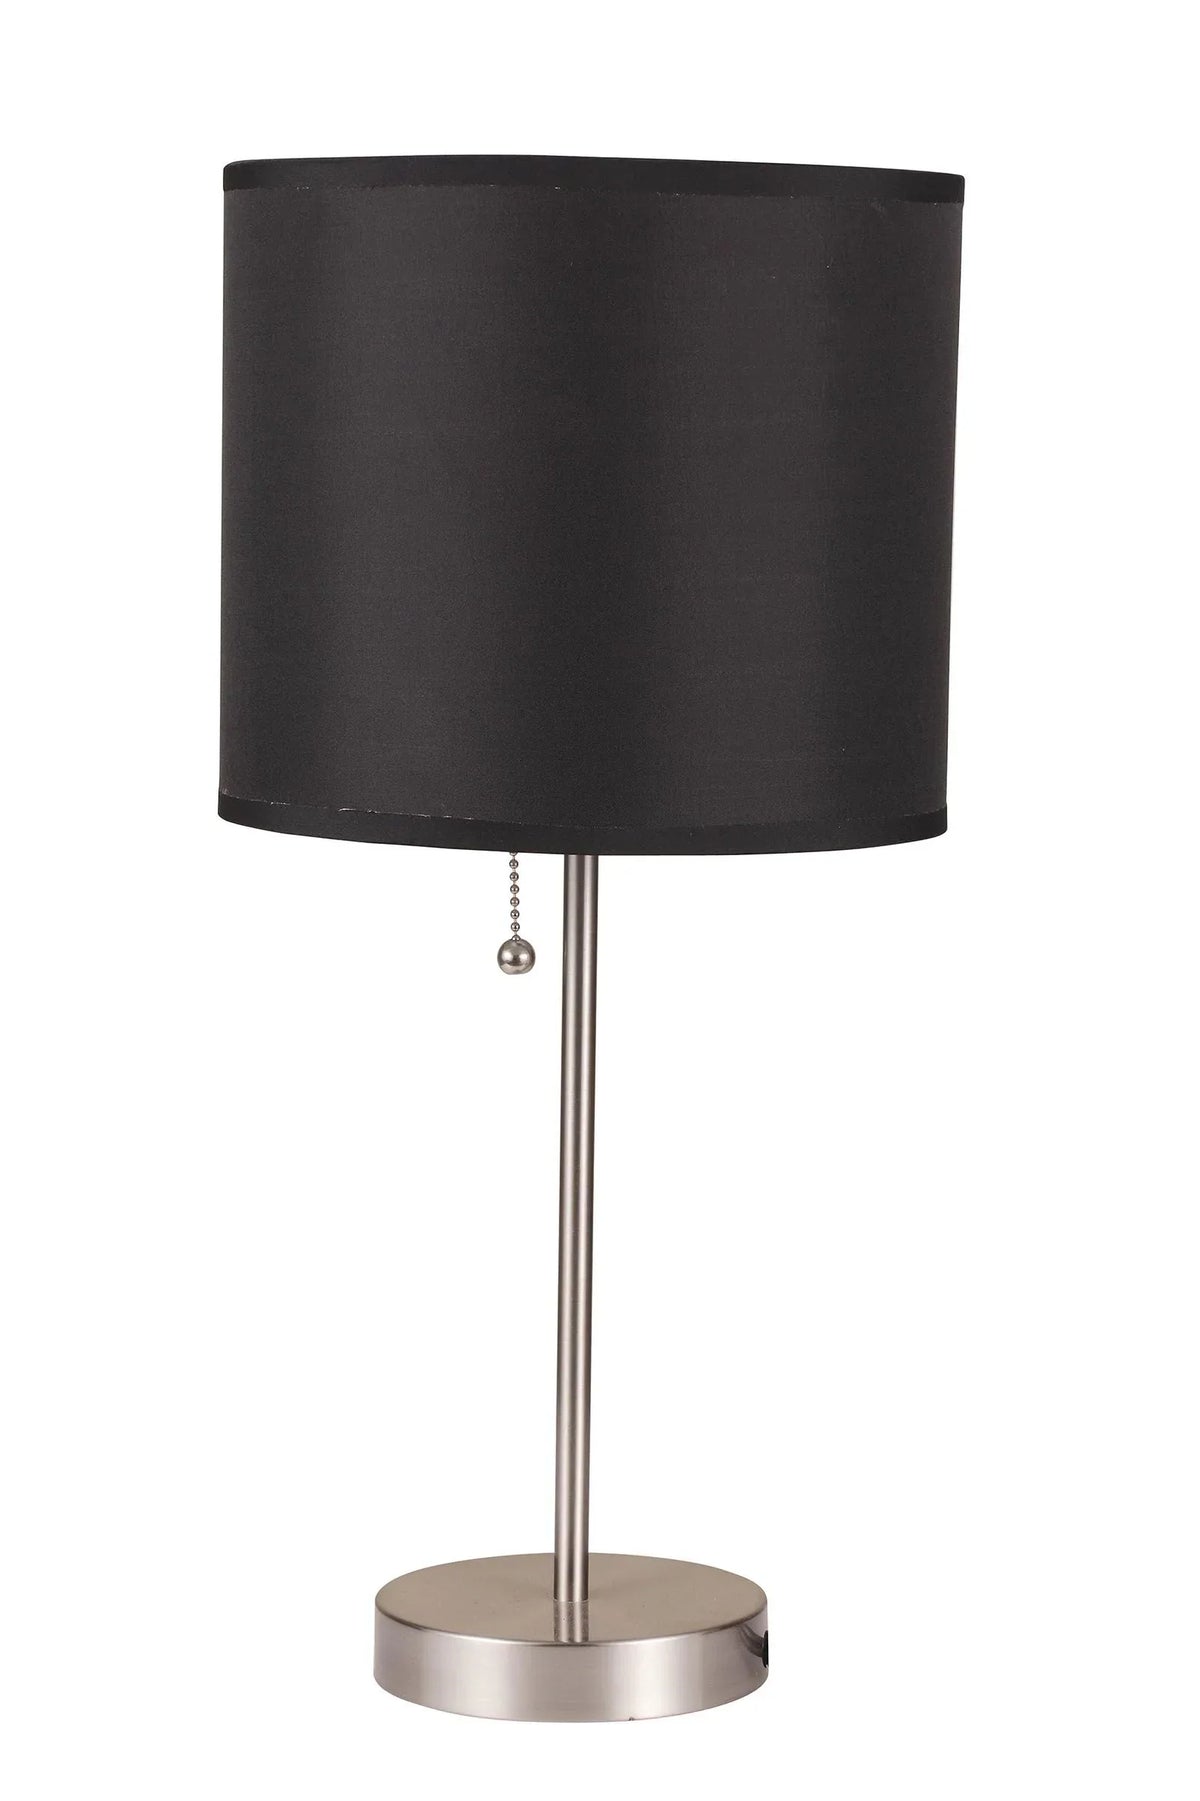 Vassy Black Shade & Brush Silver Table Lamp Model 40044 By ACME Furniture